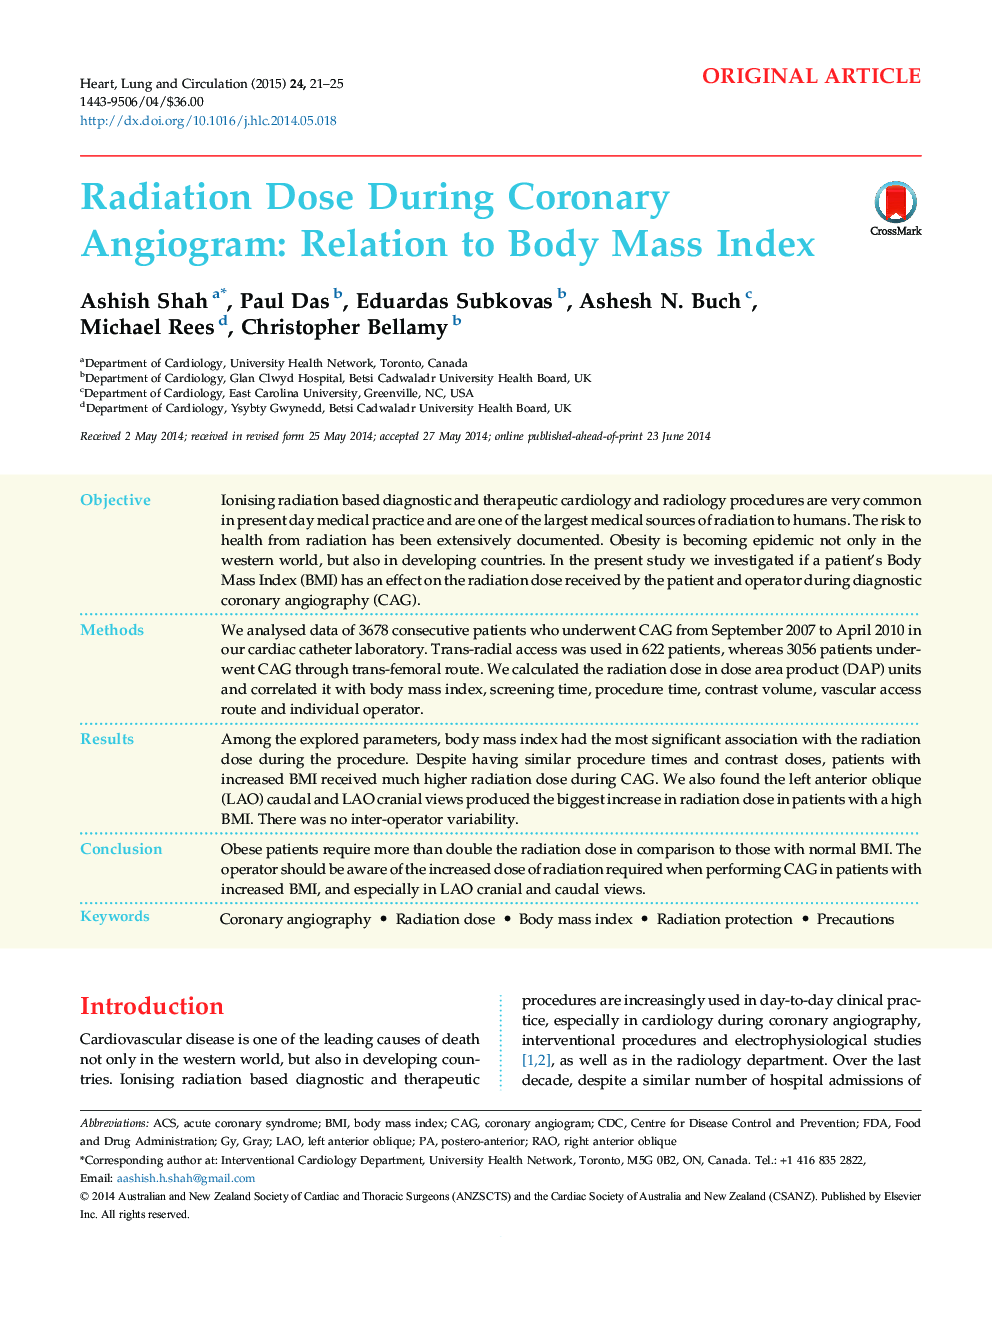 Radiation Dose During Coronary Angiogram: Relation to Body Mass Index